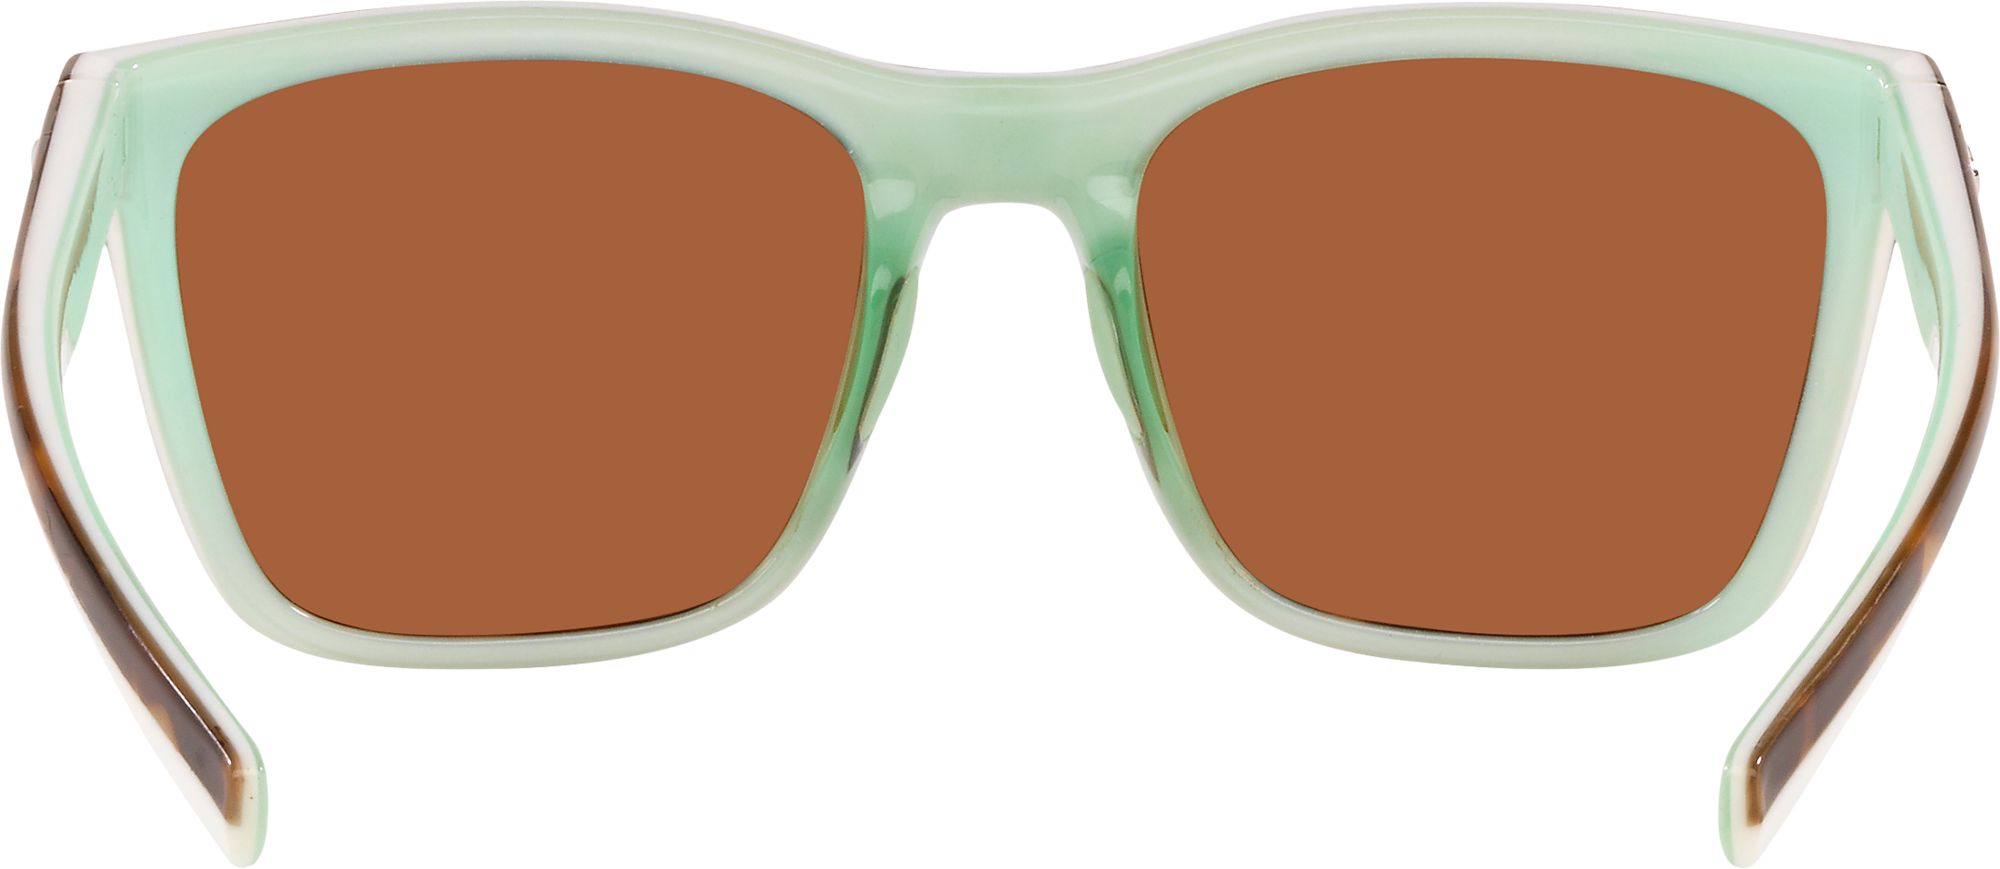 Costa Del Mar Women's Panga Polarized Sunglasses